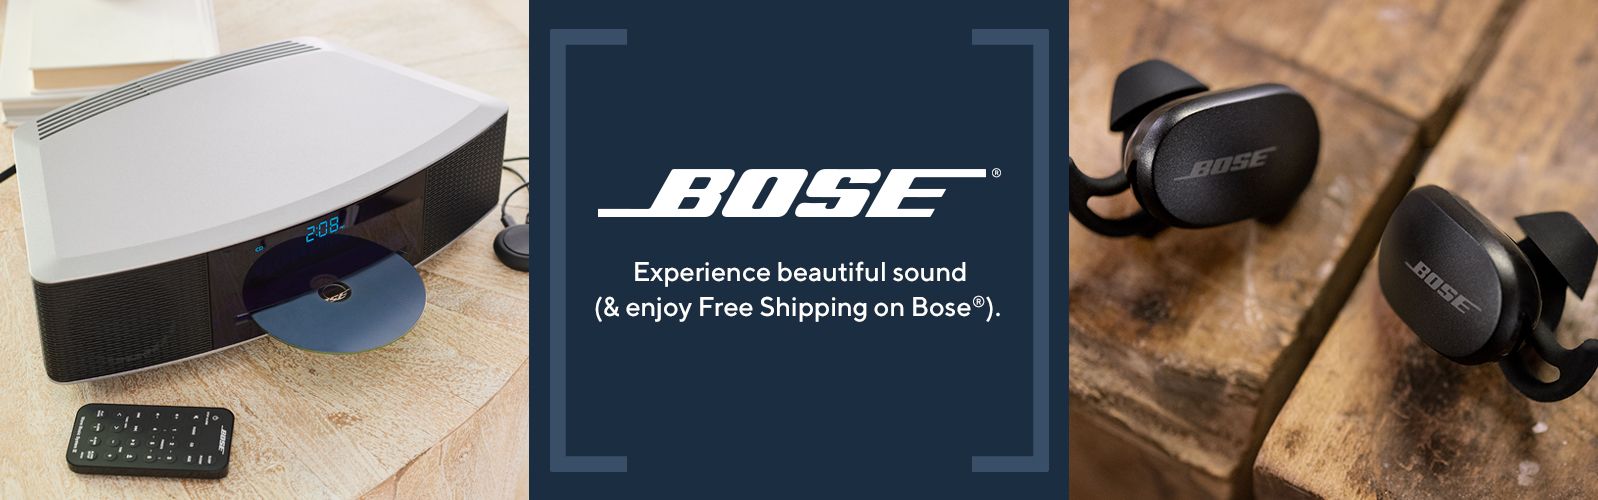 Bose - Experience beautiful sound (& enjoy Free Shipping on Bose®). 